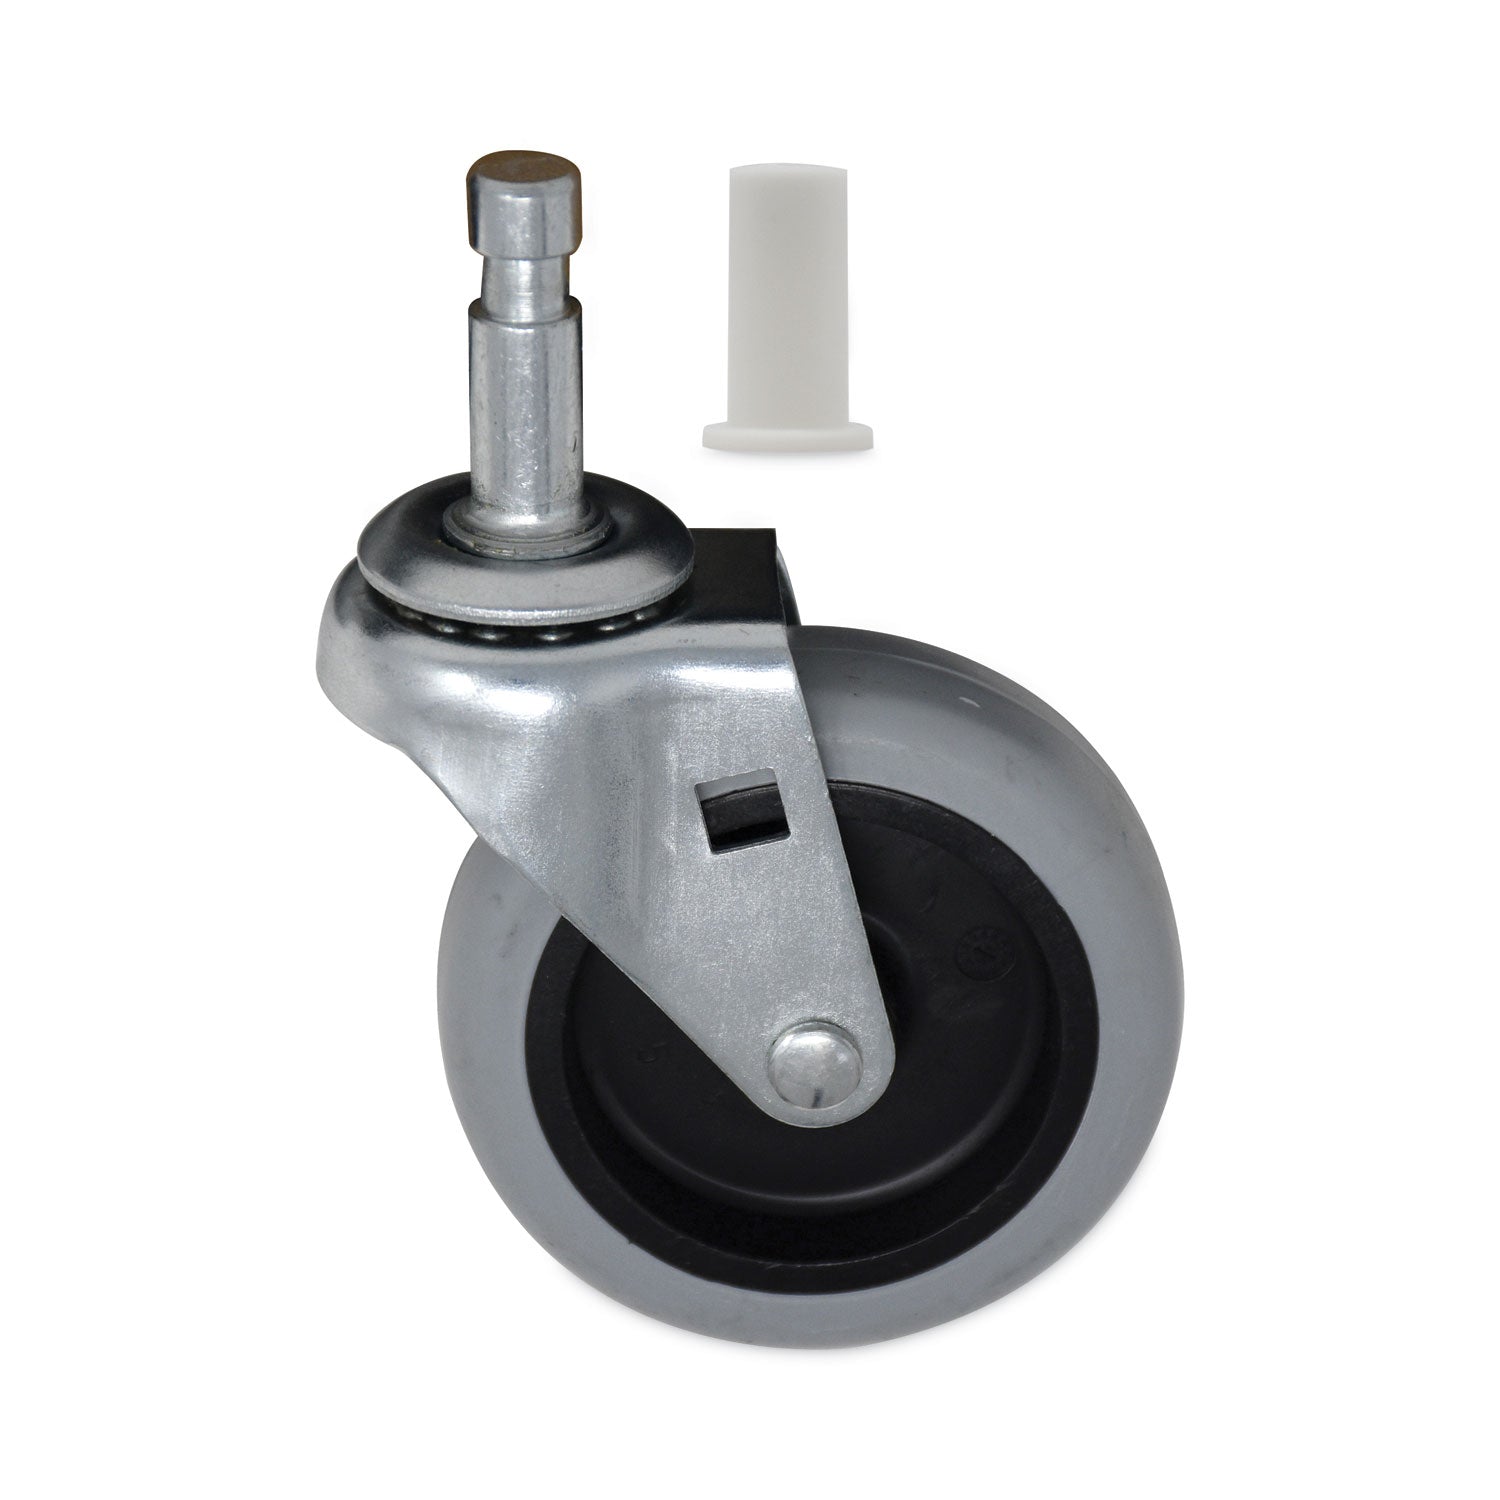 mop-bucket-wringer-replacement-caster-grip-ring-type-c-stem-3-wheel-black-gray-silver_sgsfg6111l3gray - 2